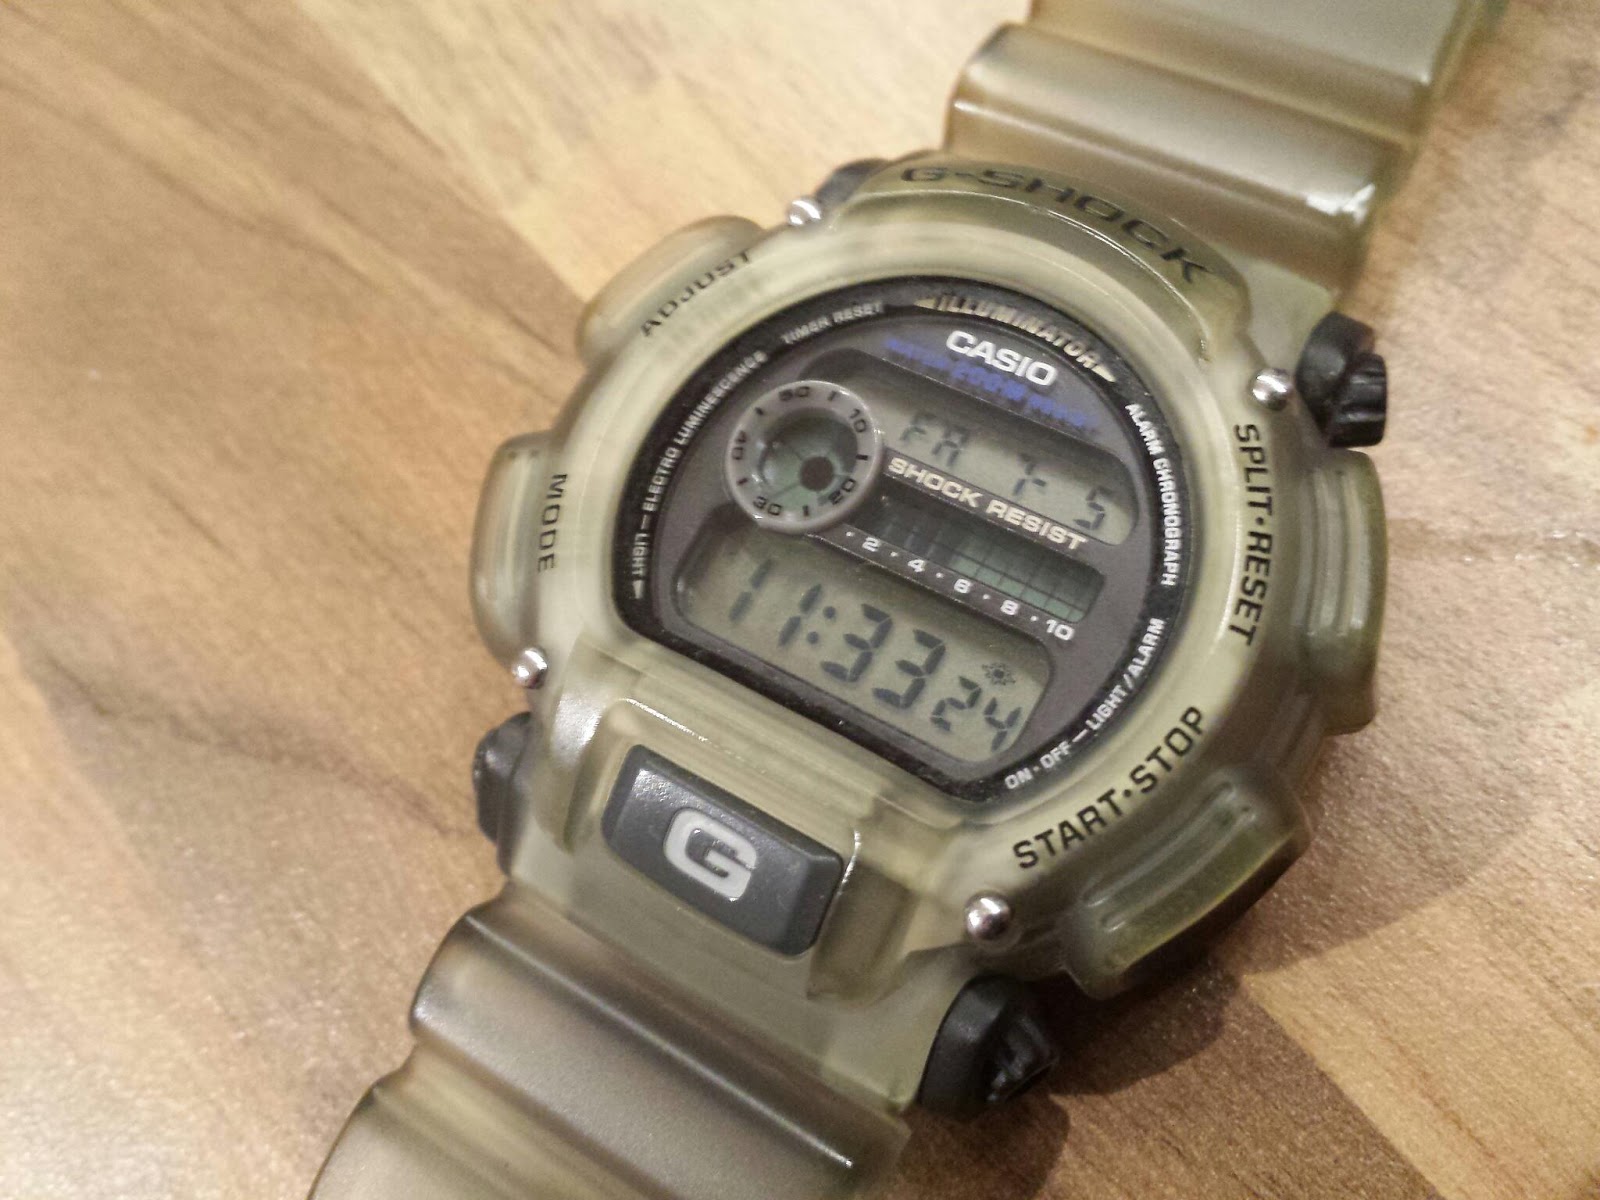 Which Watch Today: Casio G-Shock DW-9000